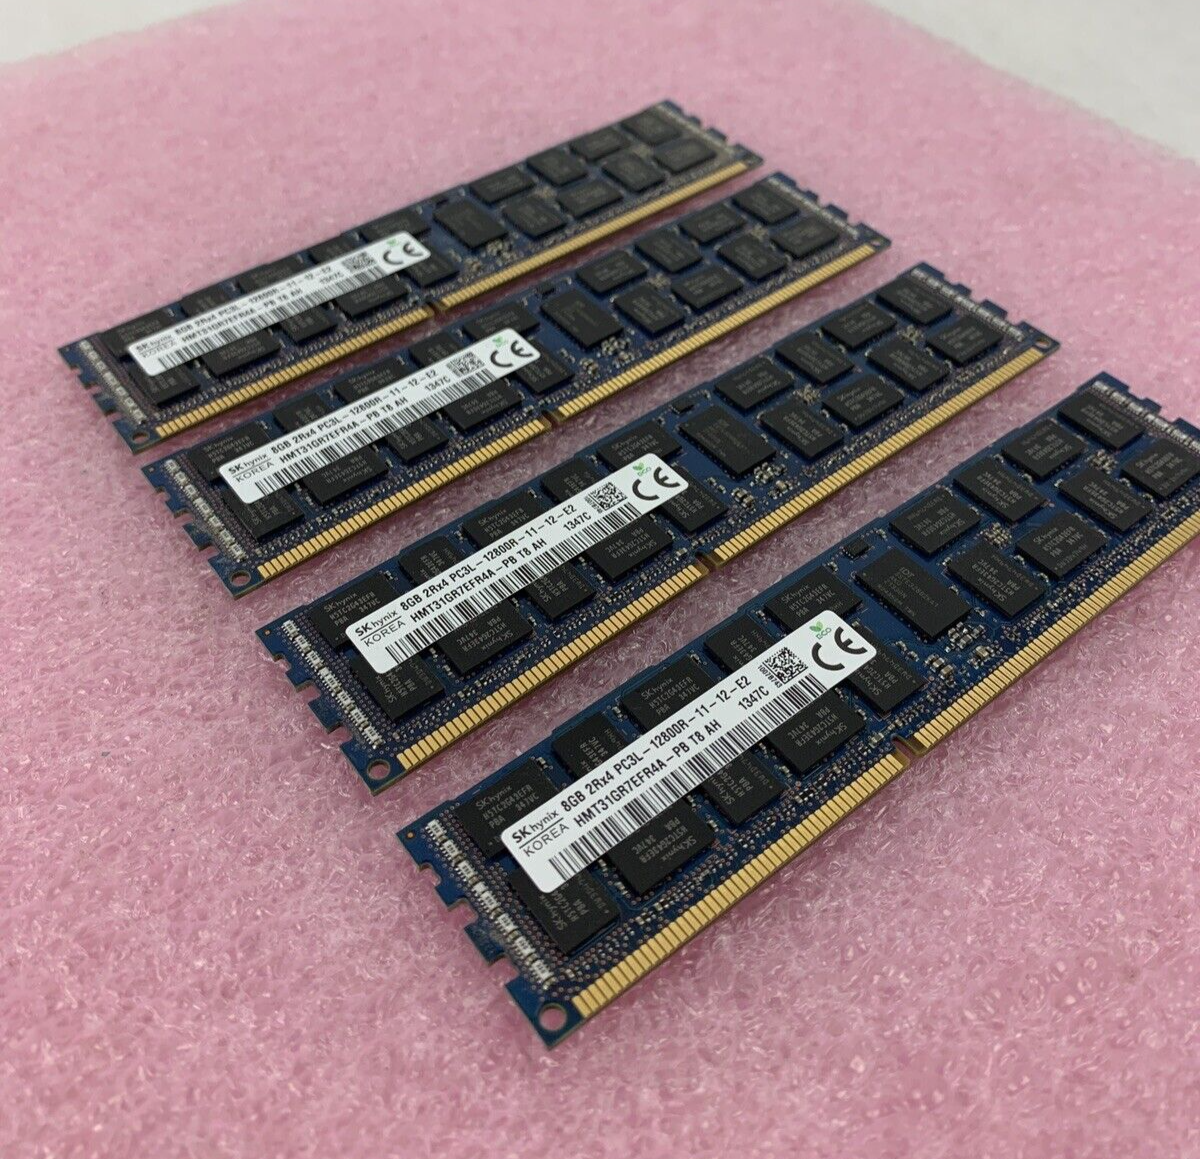 Lot of 4 Hynix 8GB PC3L-12800R DDR3-1600 ECC/REG Server RAM HMT31GR7EFR4A-PB